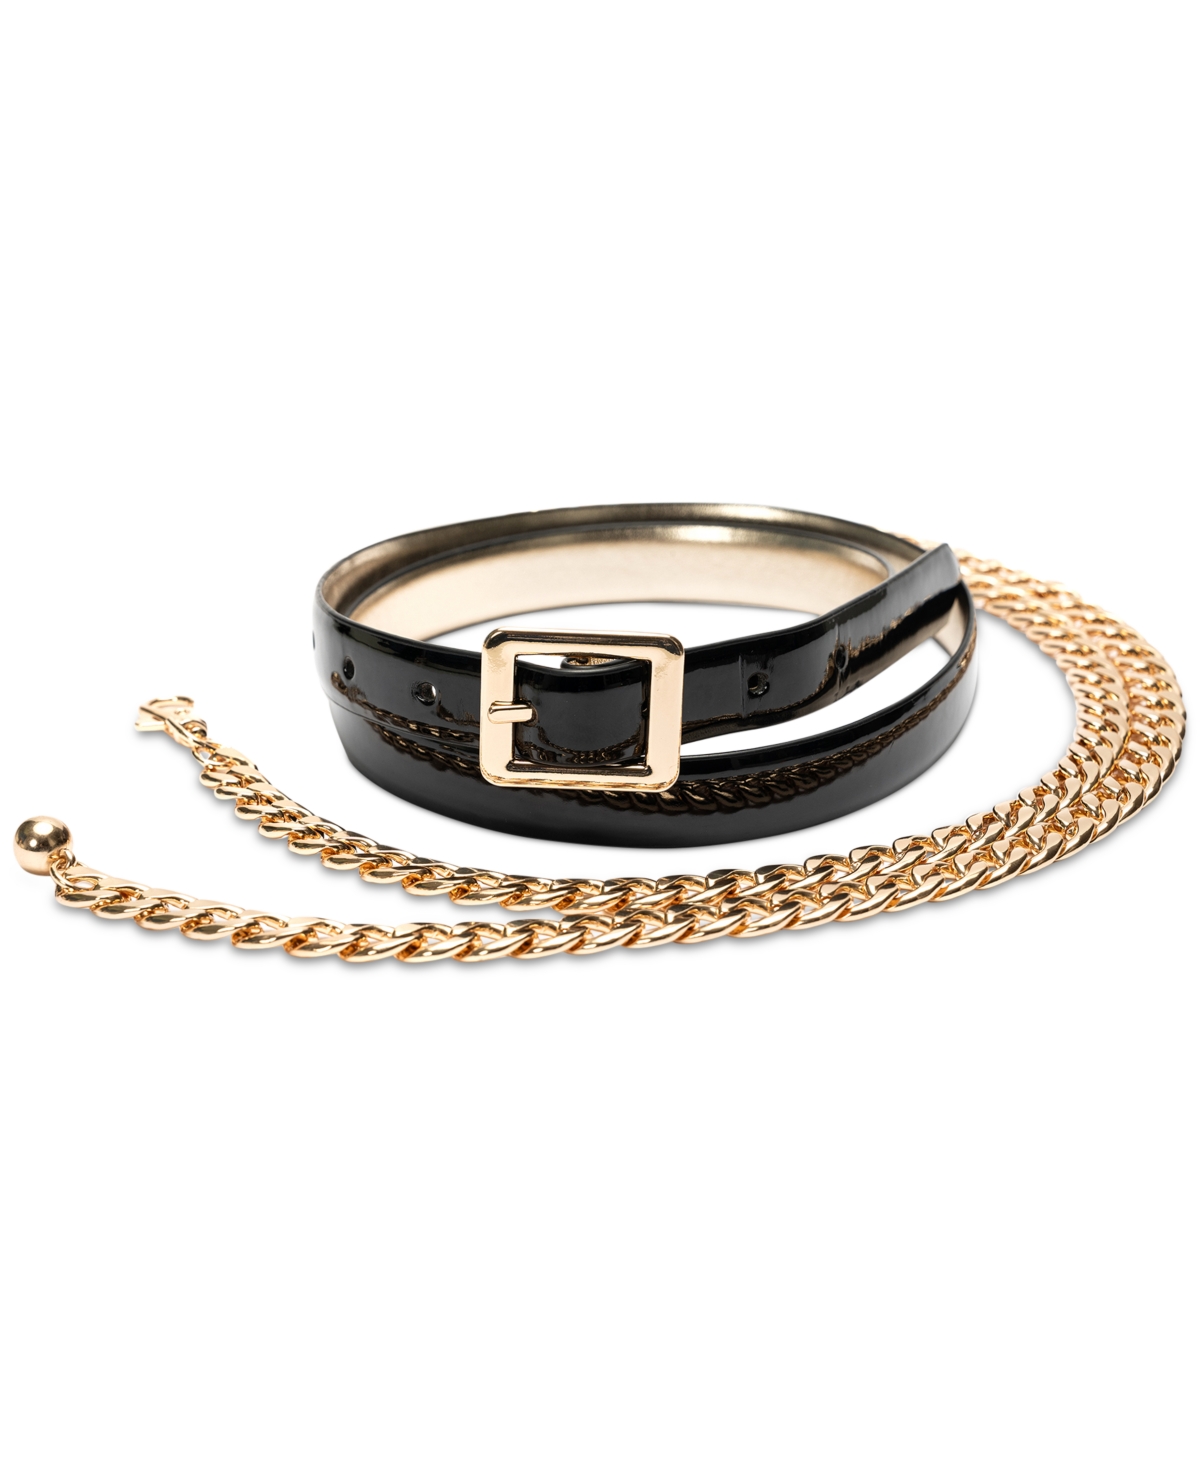 Women's Reversible & Chain Belt Set, Created for Macy's - Black Gold